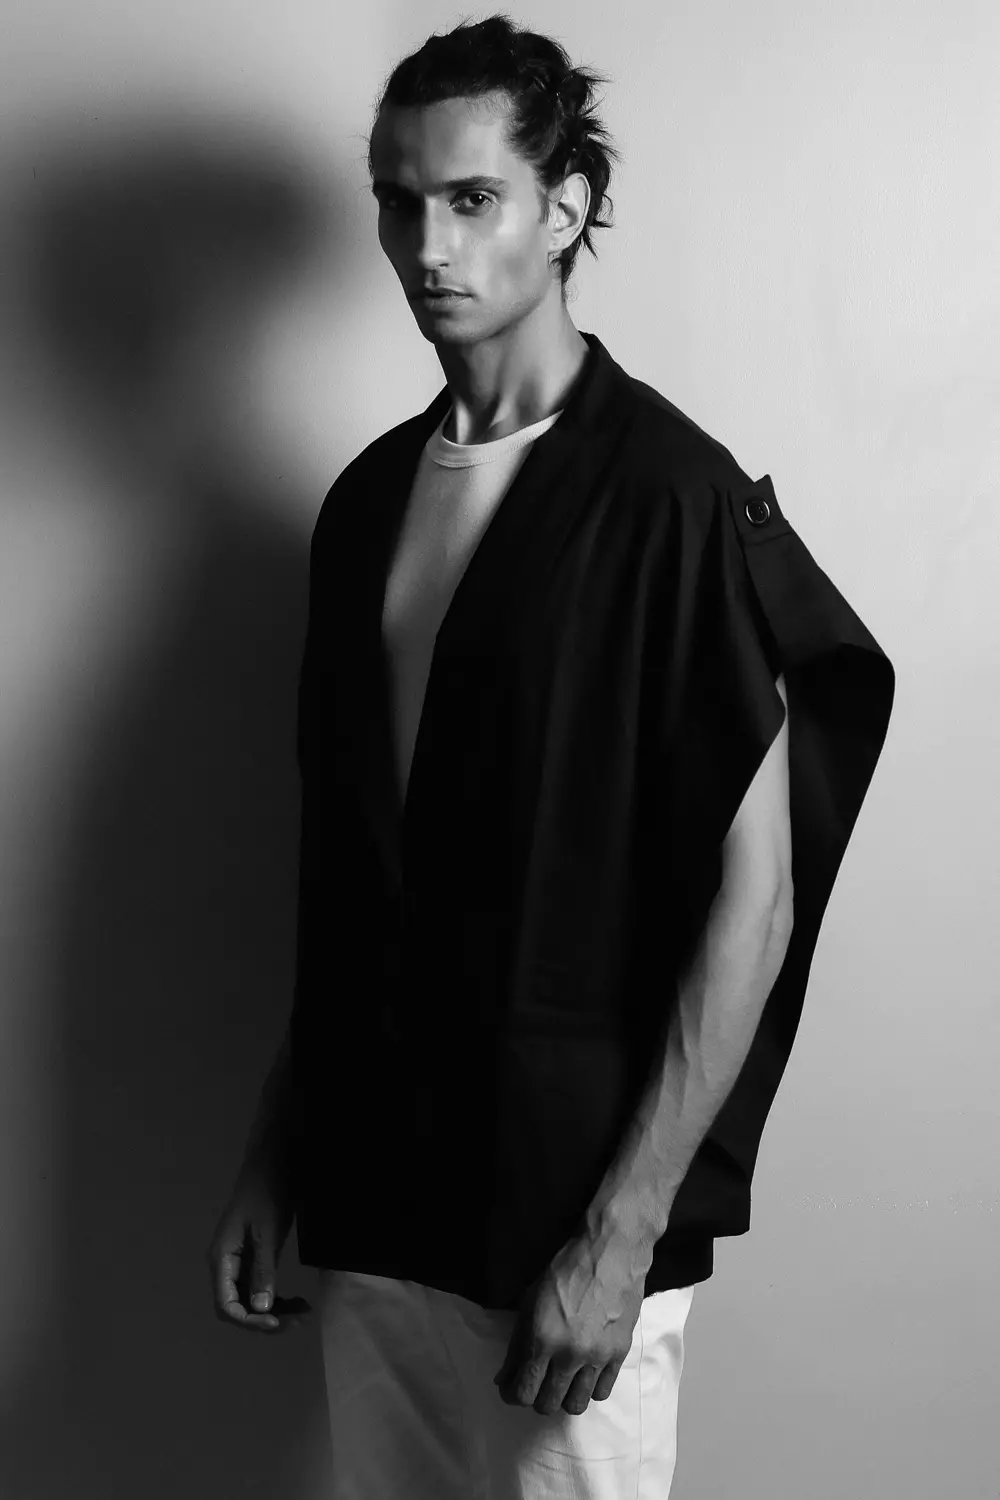 Model Giuliano Meneghin autorstwa Mendelsona Villanueva Serrano